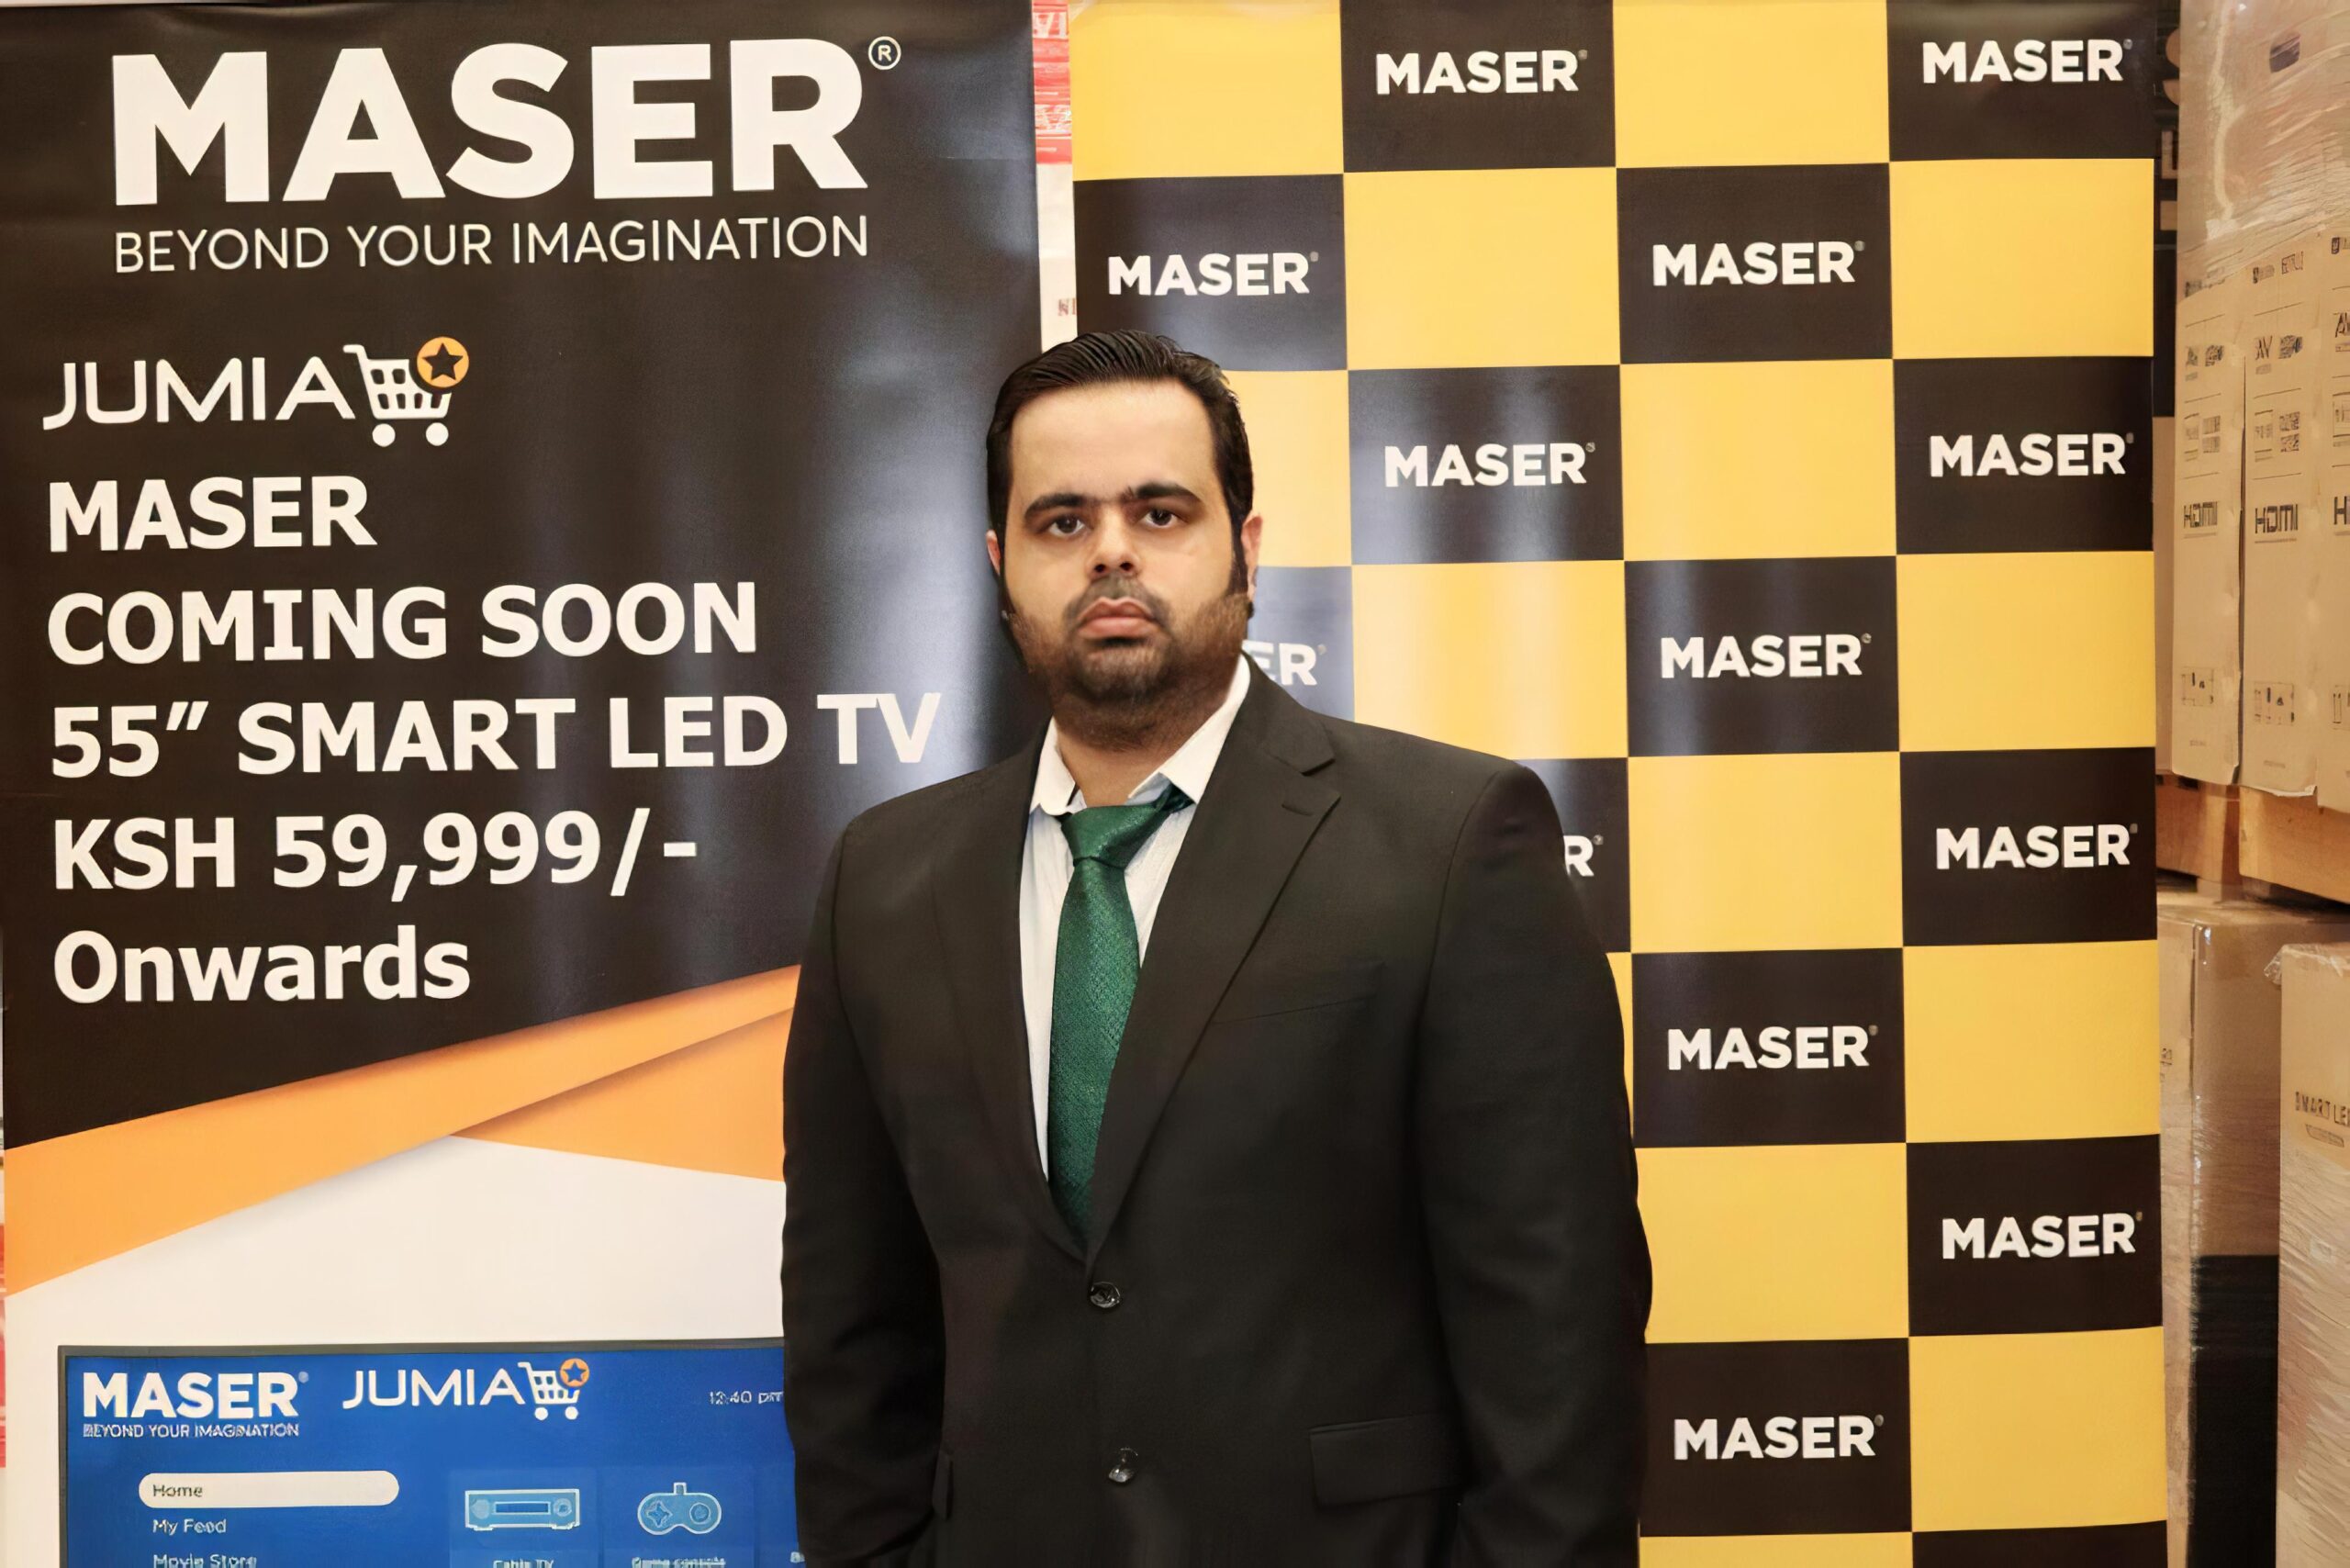 Prateek Suri, founder and CEO of UAE-based TV and electronics brand Maser